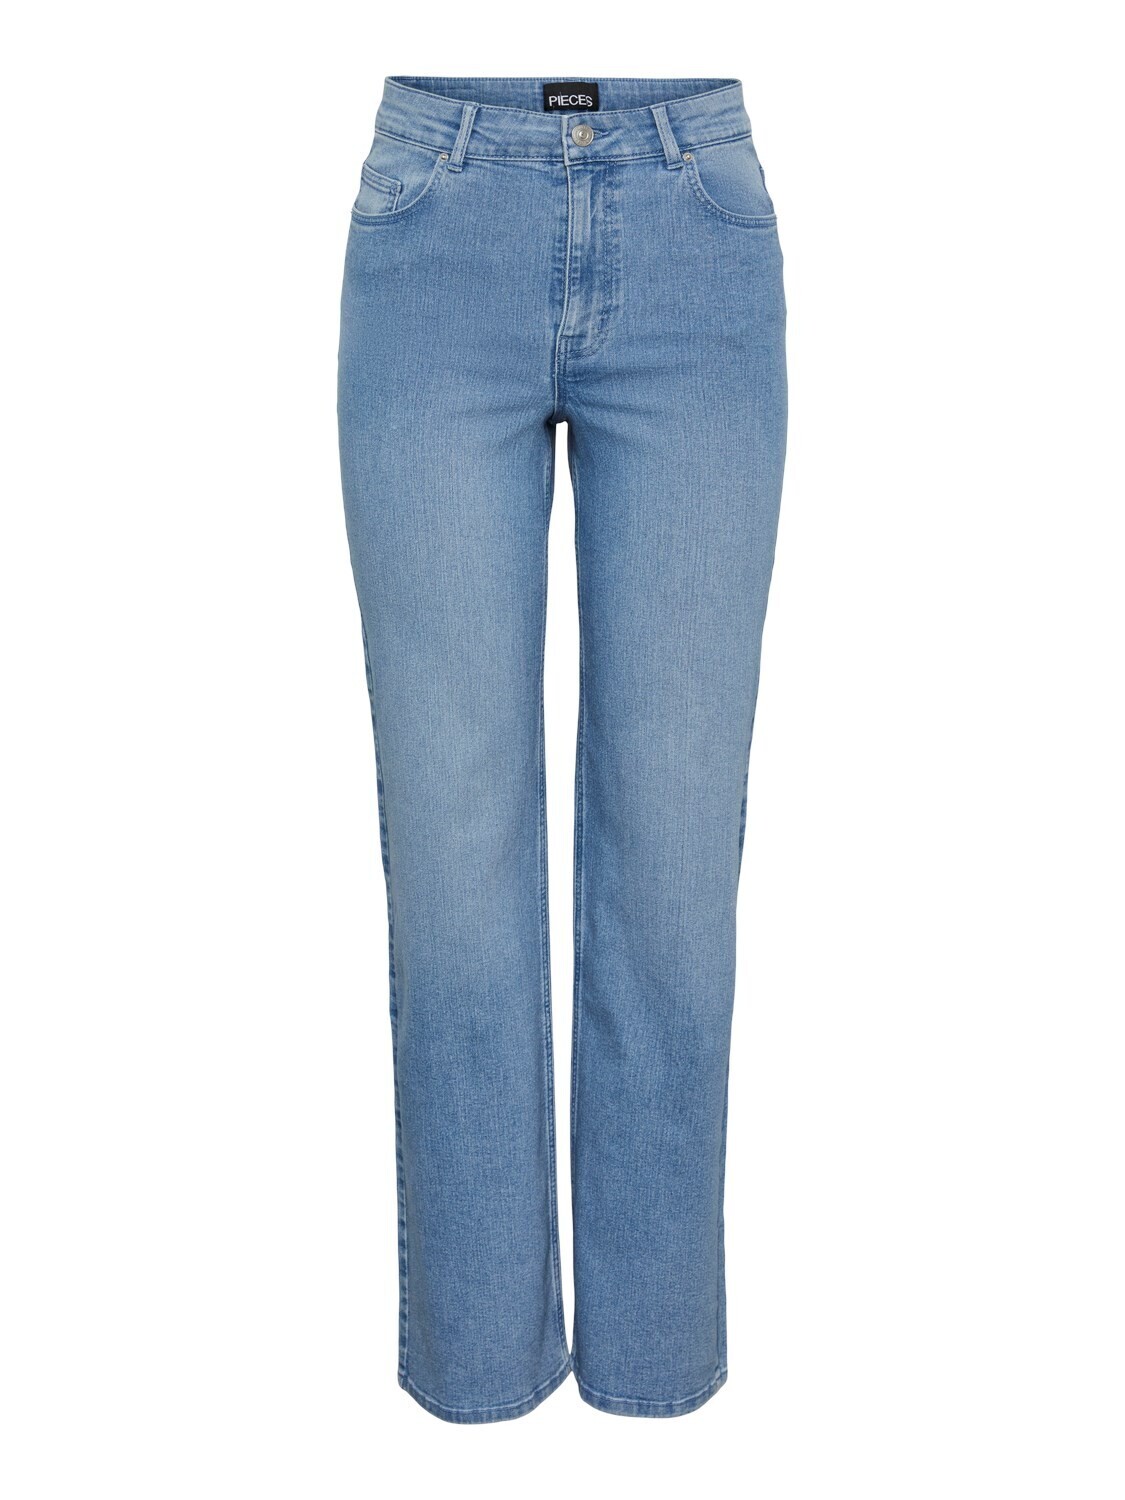 Jeans wijde broek - PEGGY - light blue